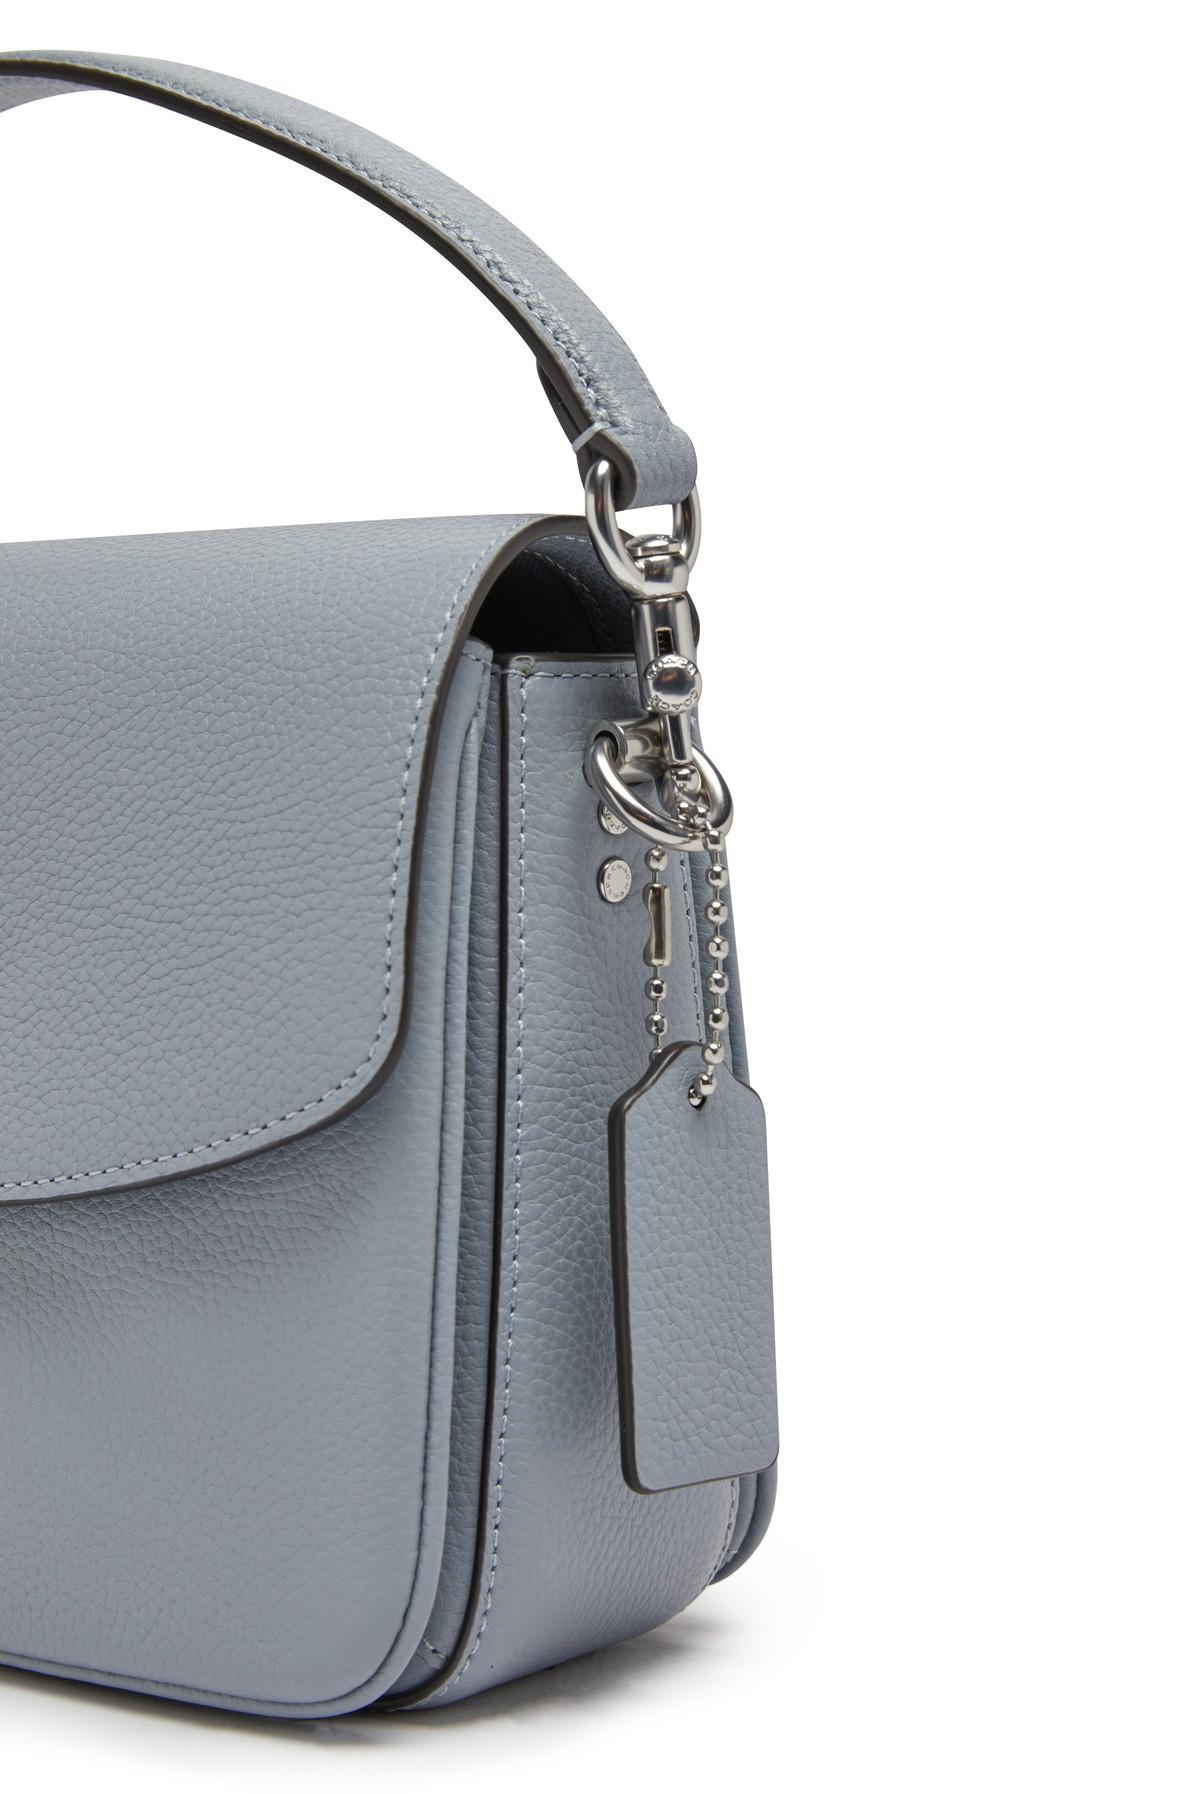 Coach Polished Pebbled Leather Cassie Crossbody 19, Grey Blue, One Size:  Handbags